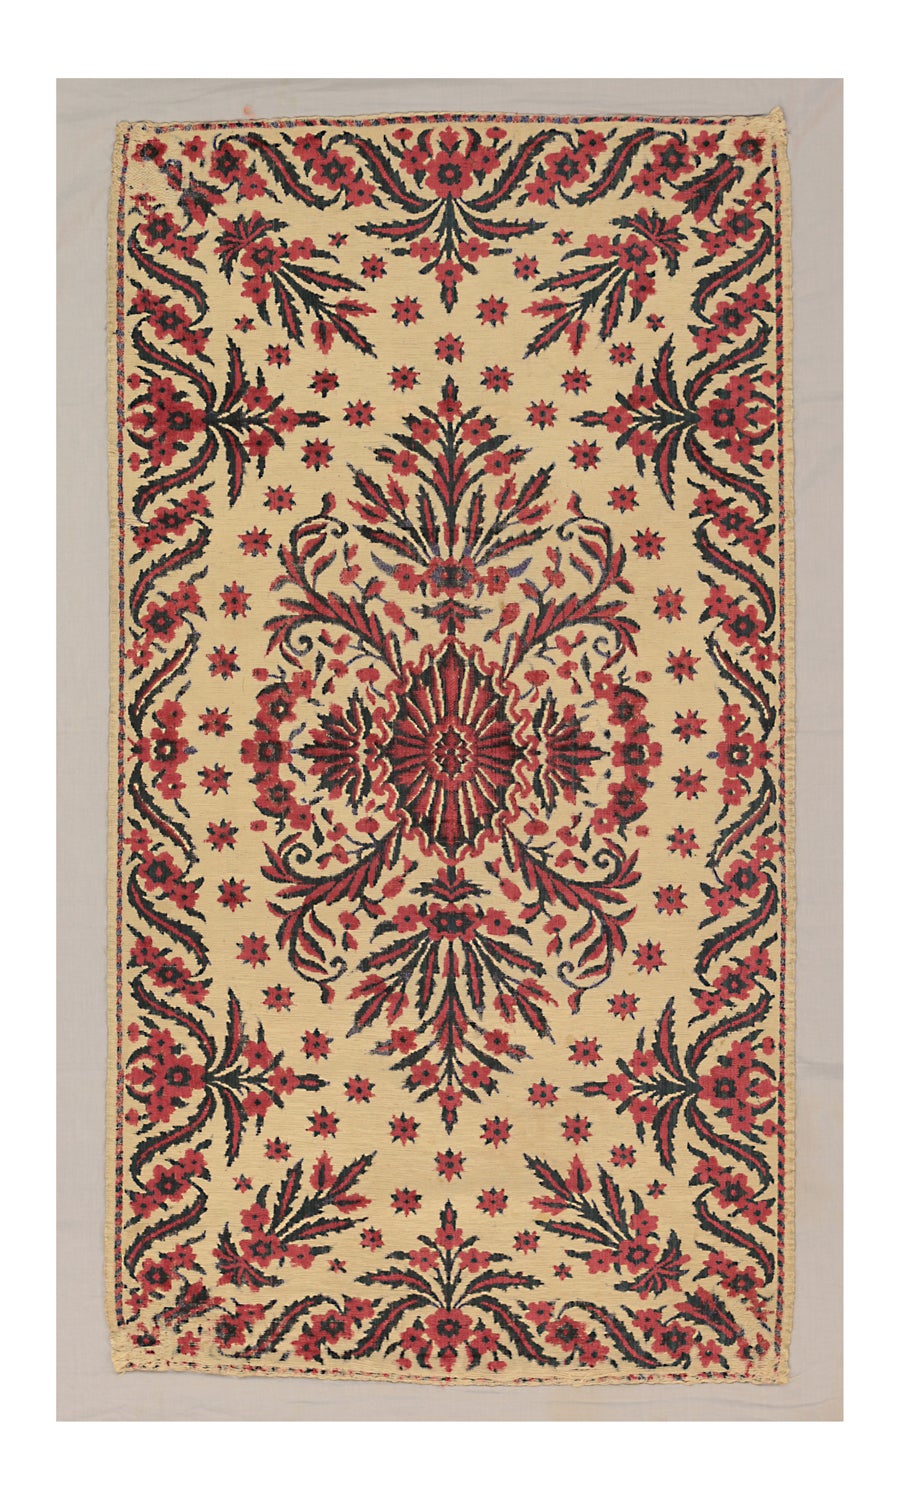 Antique Turkish Ottoman Beige Background Color Textile, 19th Century For Sale